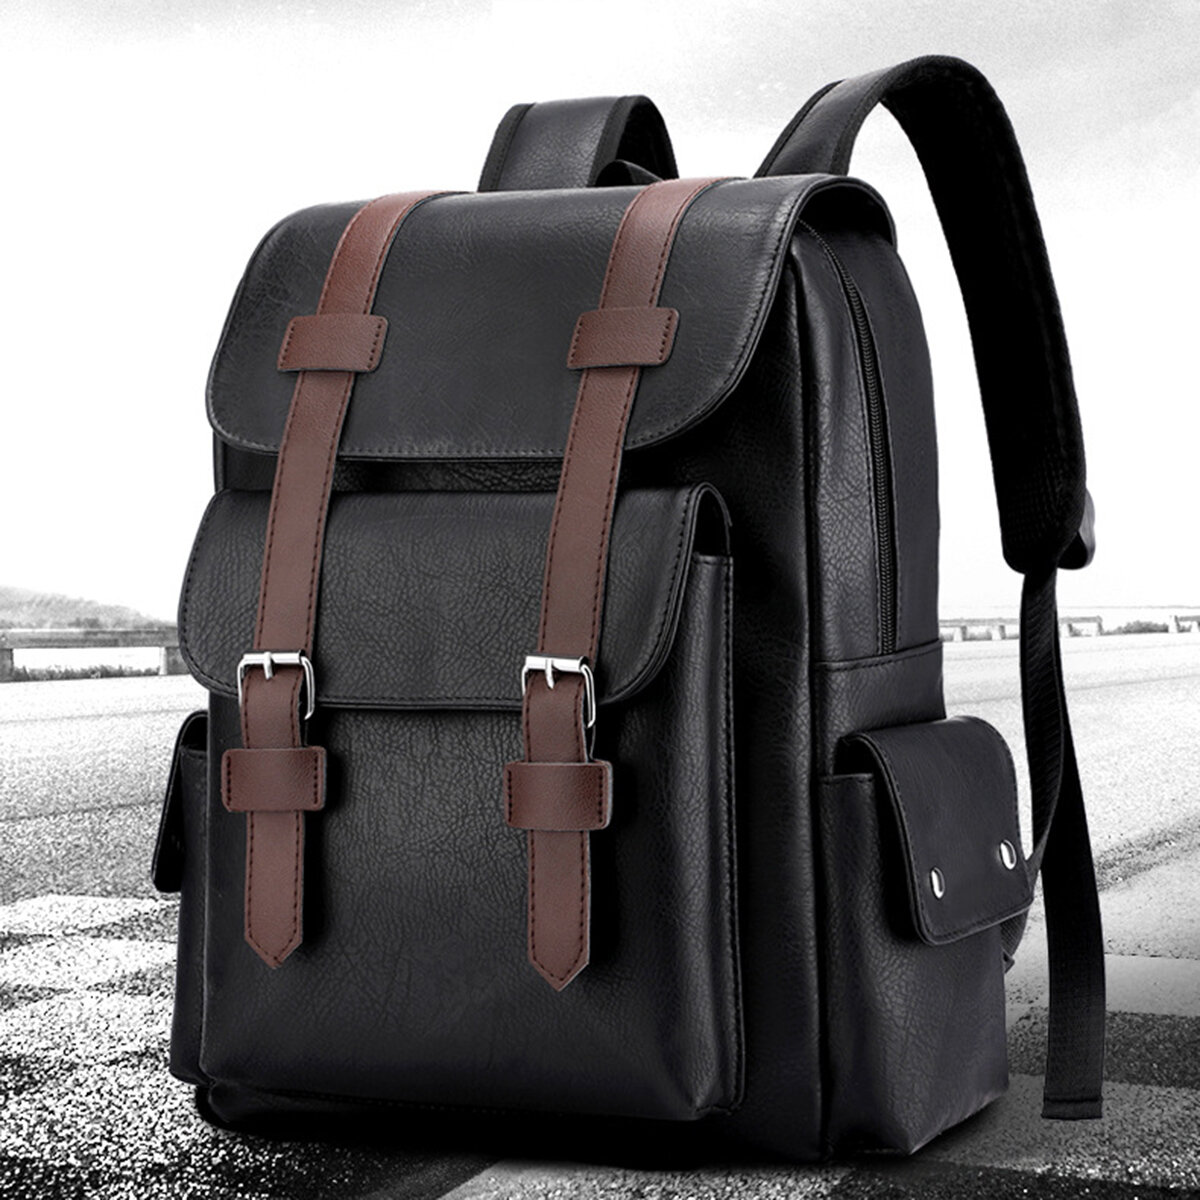 Men Leather School Backpacks Outdoor Travel Satchel Shoulder Bag Rucksack Satchel Handbag